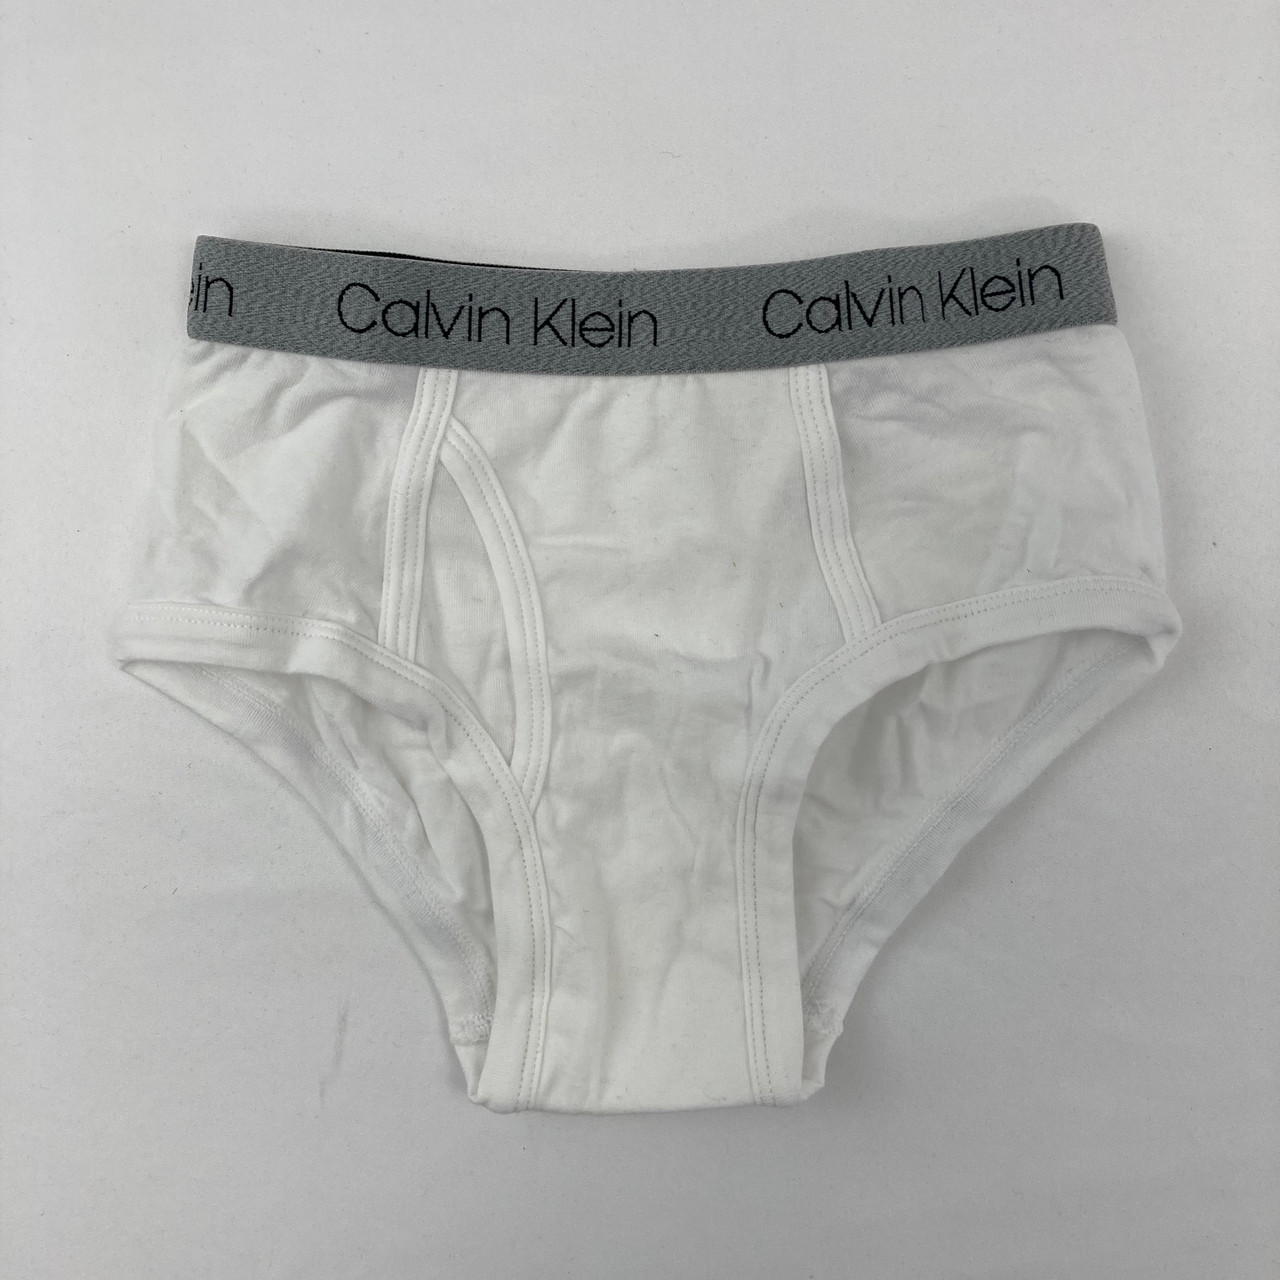 Calvin Klein Men's Cotton Stretch Multipack Low Rise Trunks Pride Pack,  Wizard Gold, Party Pink, Pop Yellow,blue Cyan, Zen Green, Small price in  Saudi Arabia,  Saudi Arabia